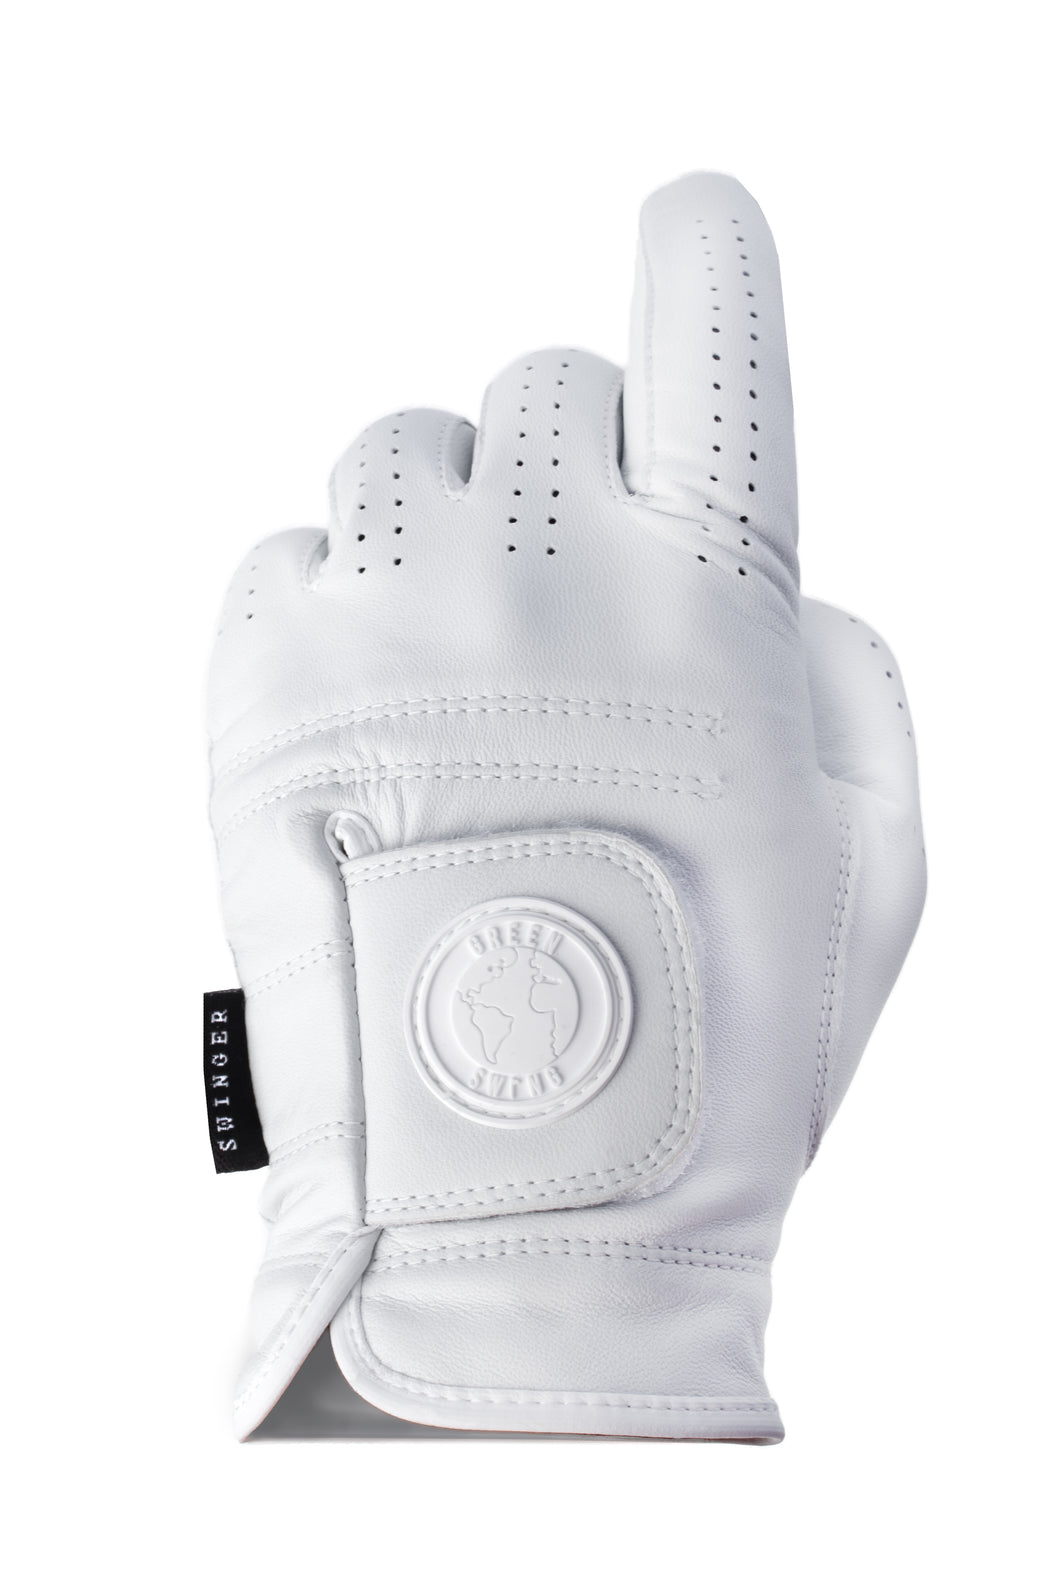 White Cabretta Leather Golf Gove | High Quality Golf Glove | Men's